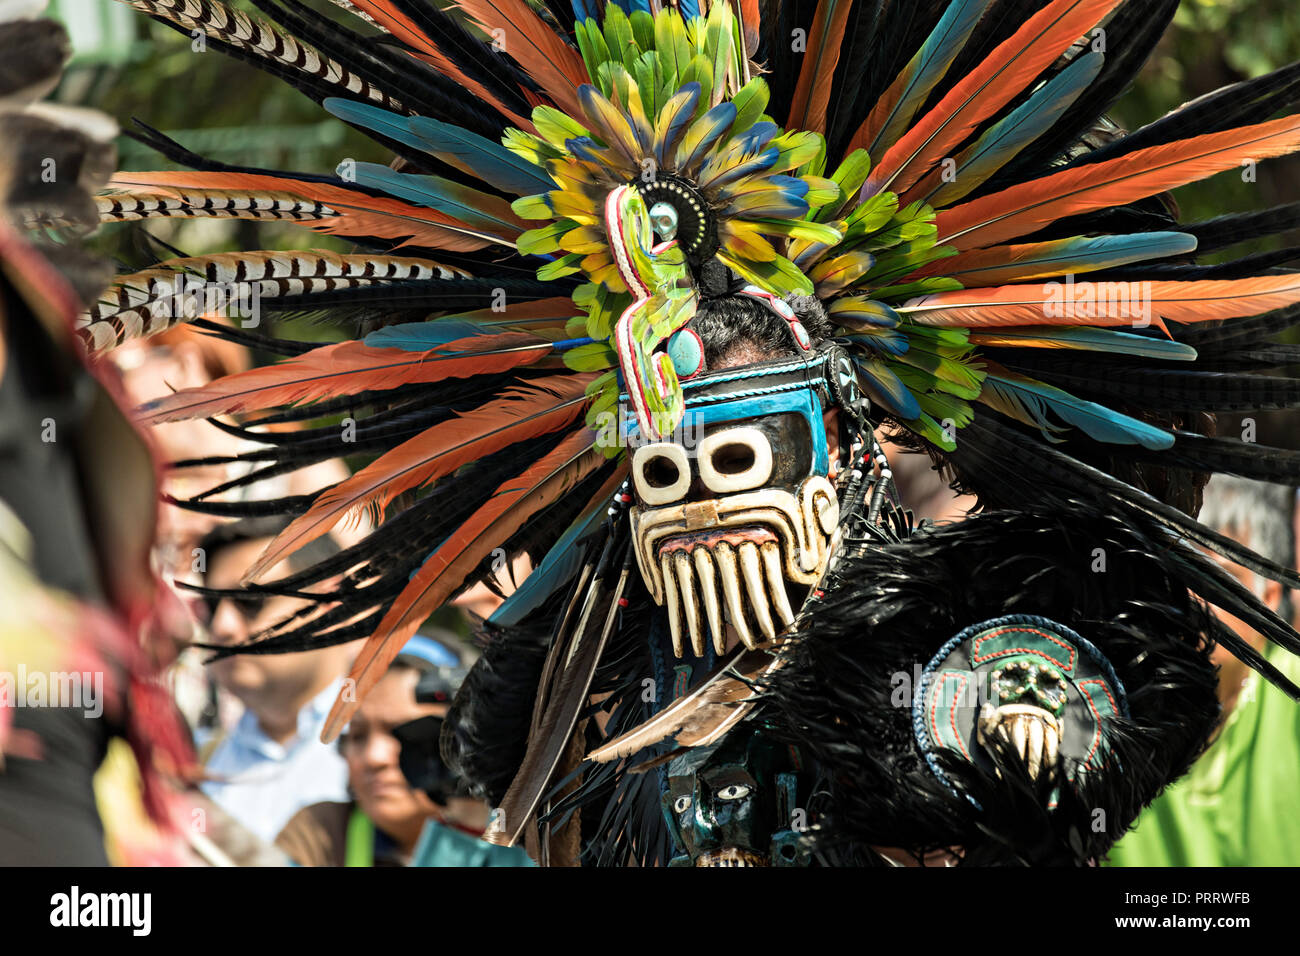 Chichimecas aztecas mexicas fotografías e imágenes de alta resolución -  Alamy